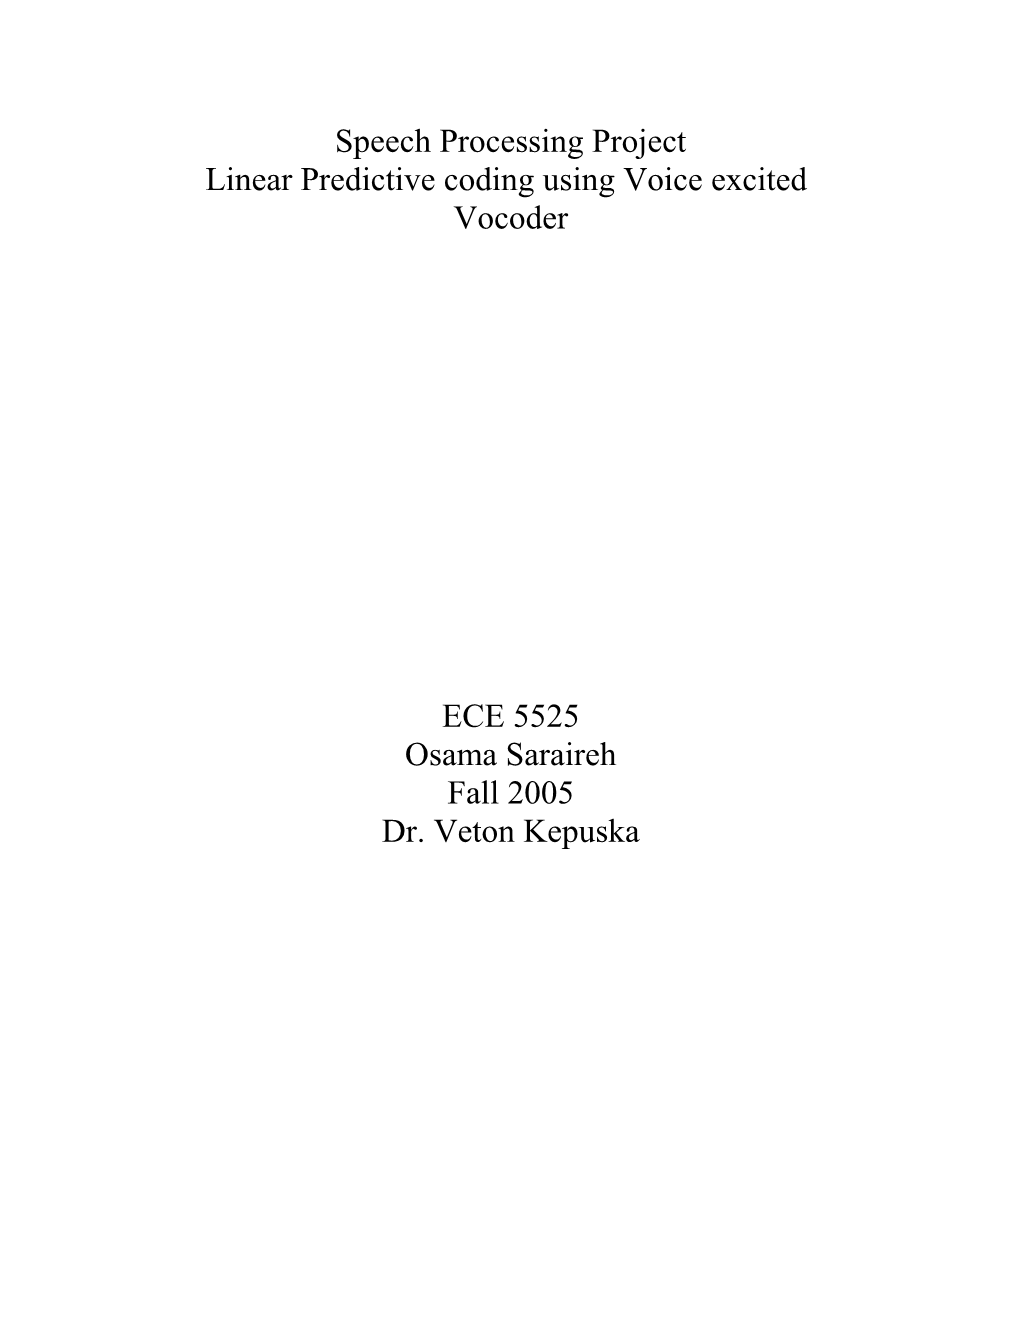 Linear Predictive Coding (LPC) of Speech